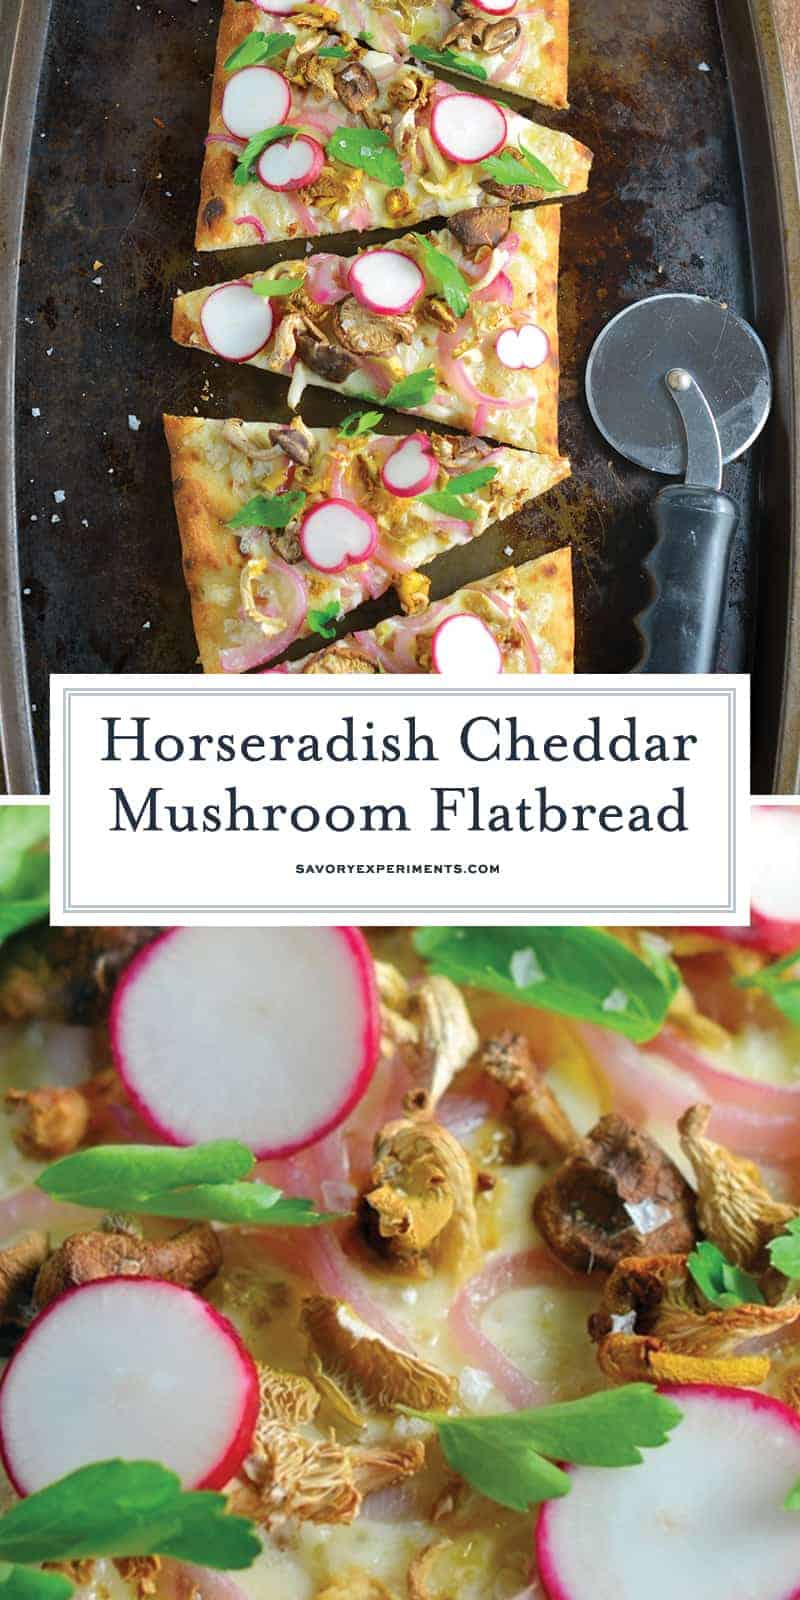 Horseradish Cheddar Mushroom Flatbread combines a mushroom blend, fresh radishes, pickled red onion, tangy horseradish cheddar cheese, Italian parsley and Maldon sea salt. Delicious! #vegetarianappetizers #flatbreadrecipes www.savoryexperiments.com 